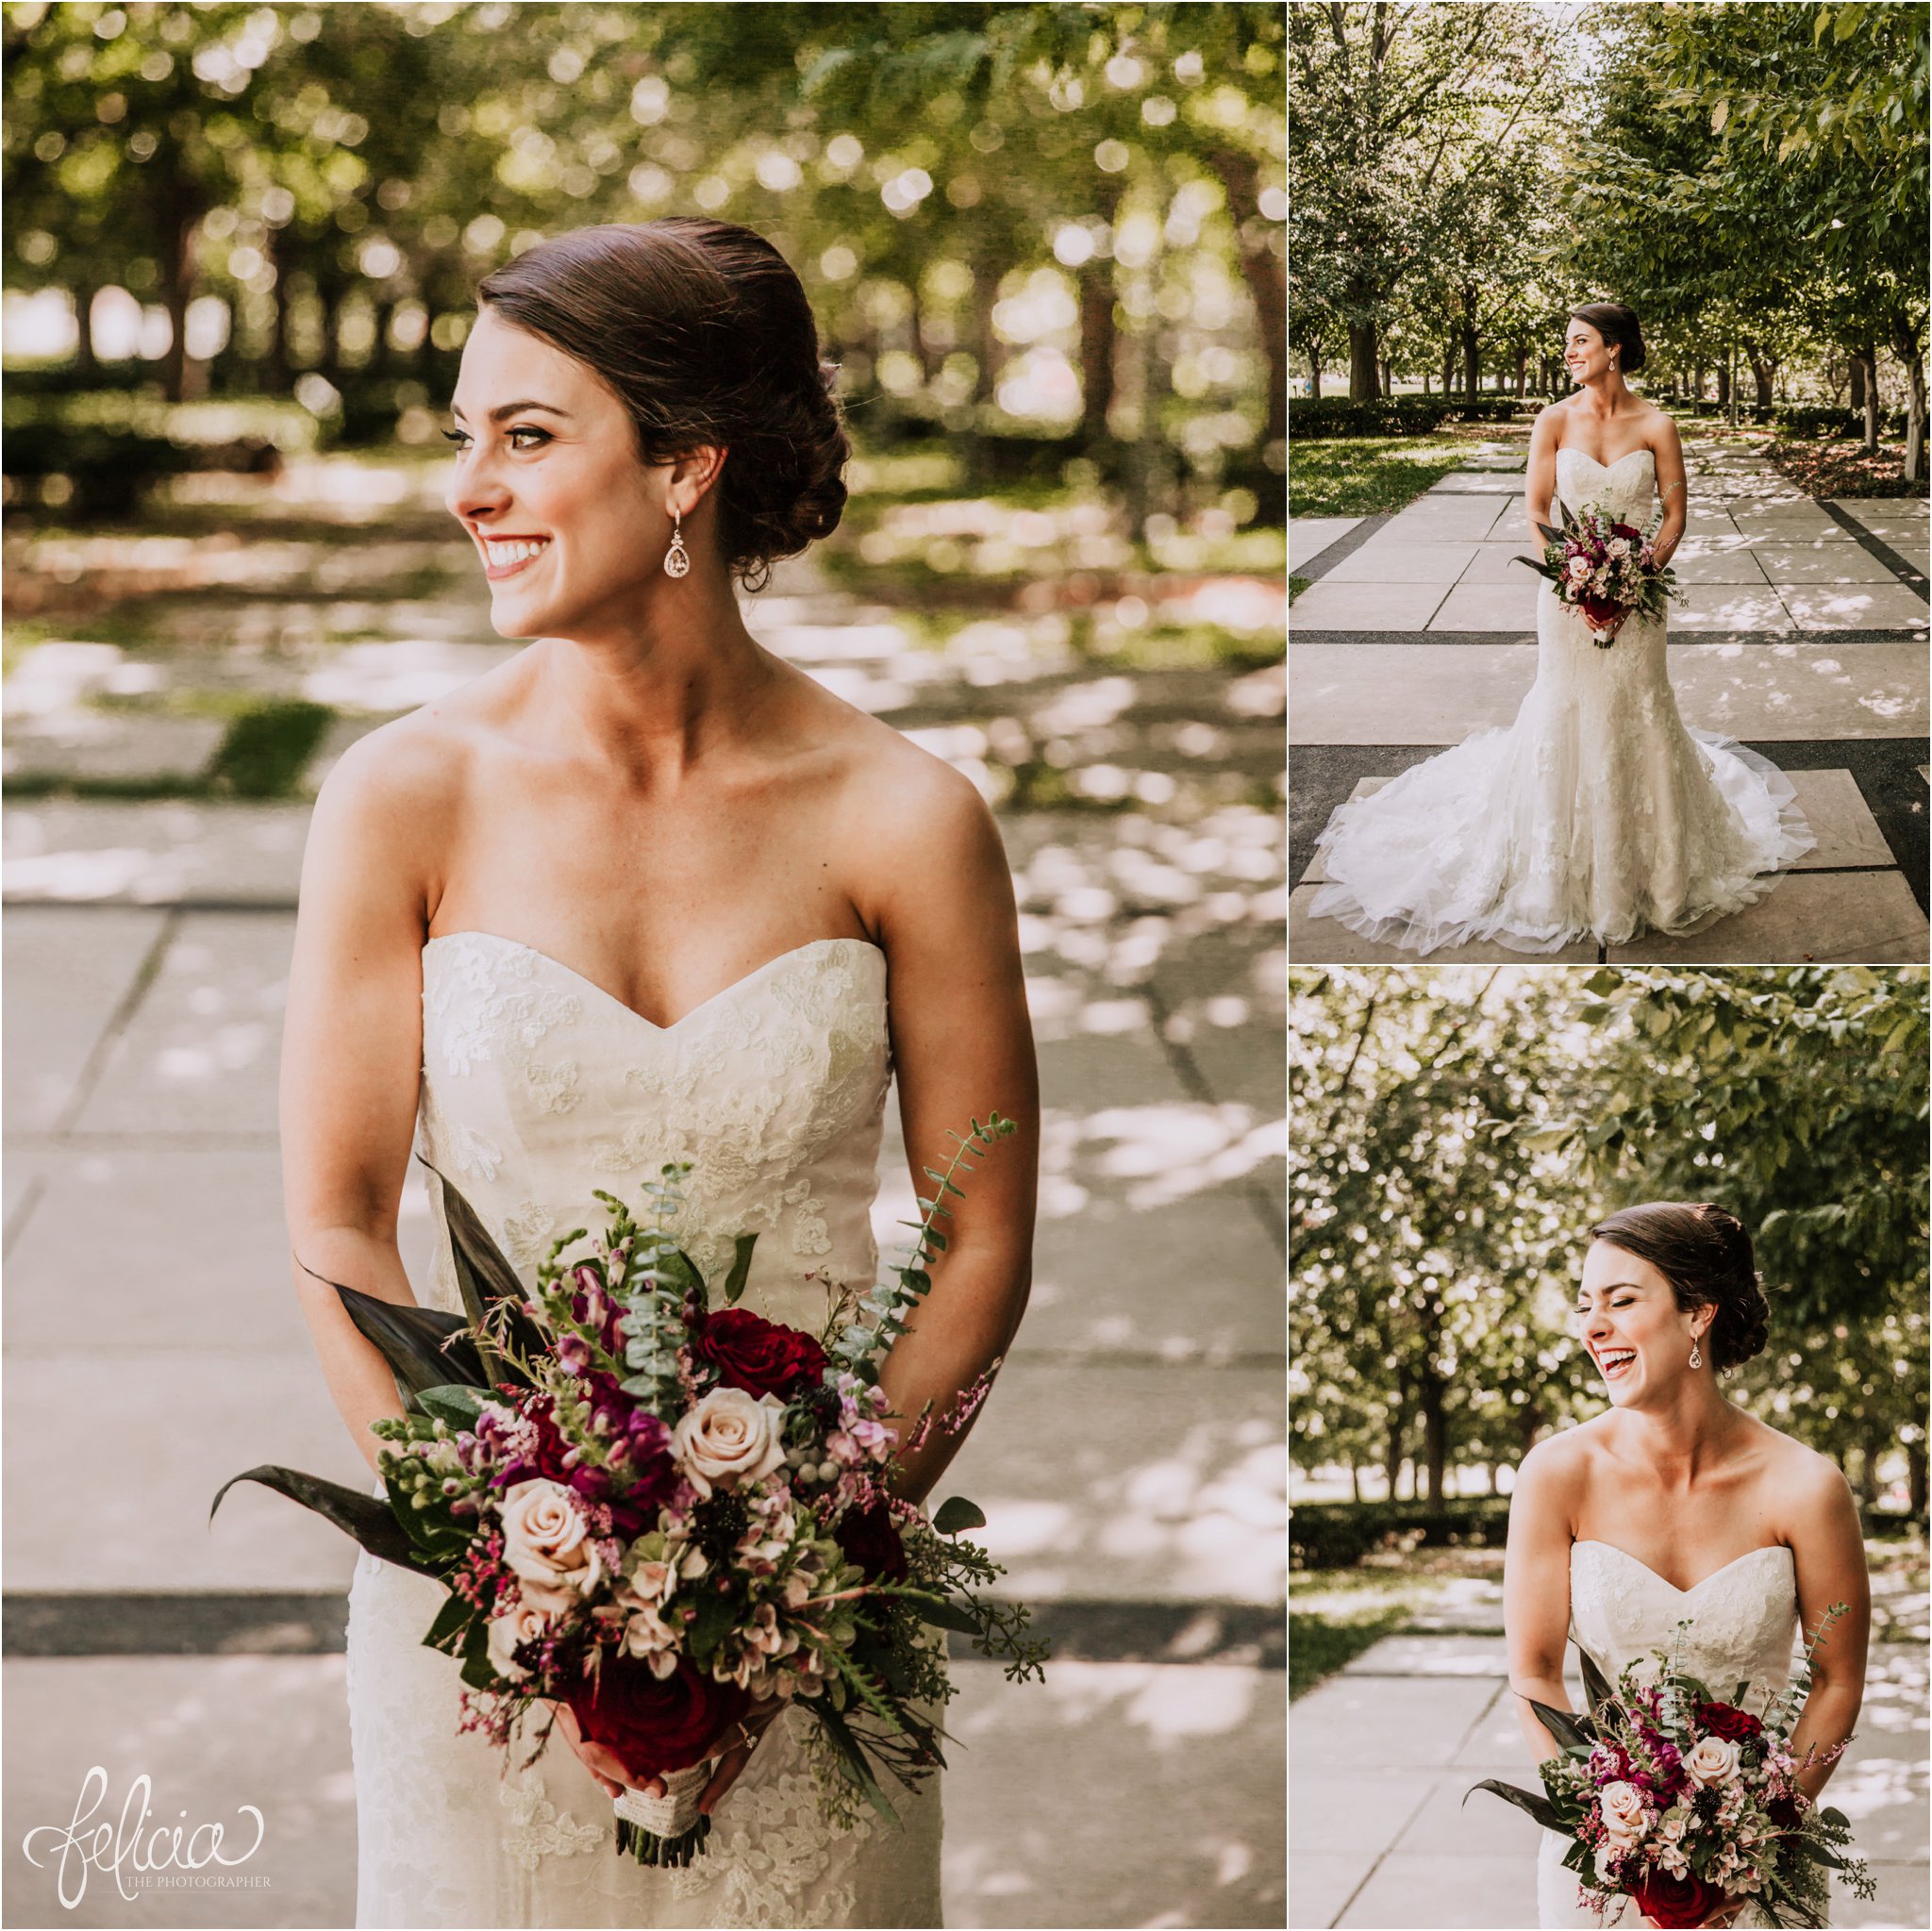 images by feliciathephotographer.com | wedding photographer | kansas city | bride portrait | strapless lace floral dress | emily hart | nelson atkins art museum | trees | natural lighting | 